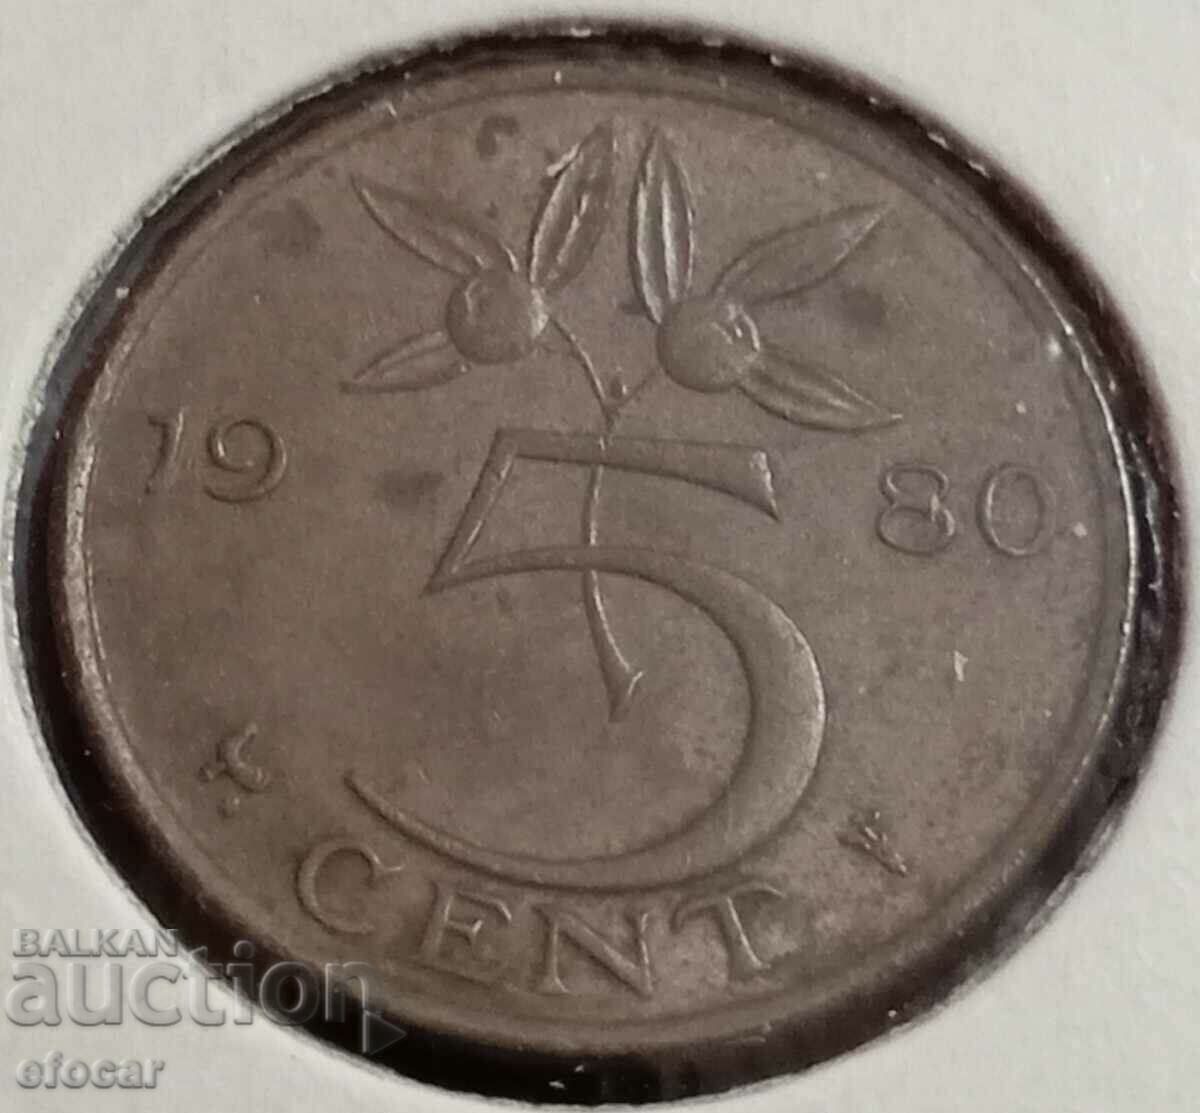 5 cent Netherlands 1980